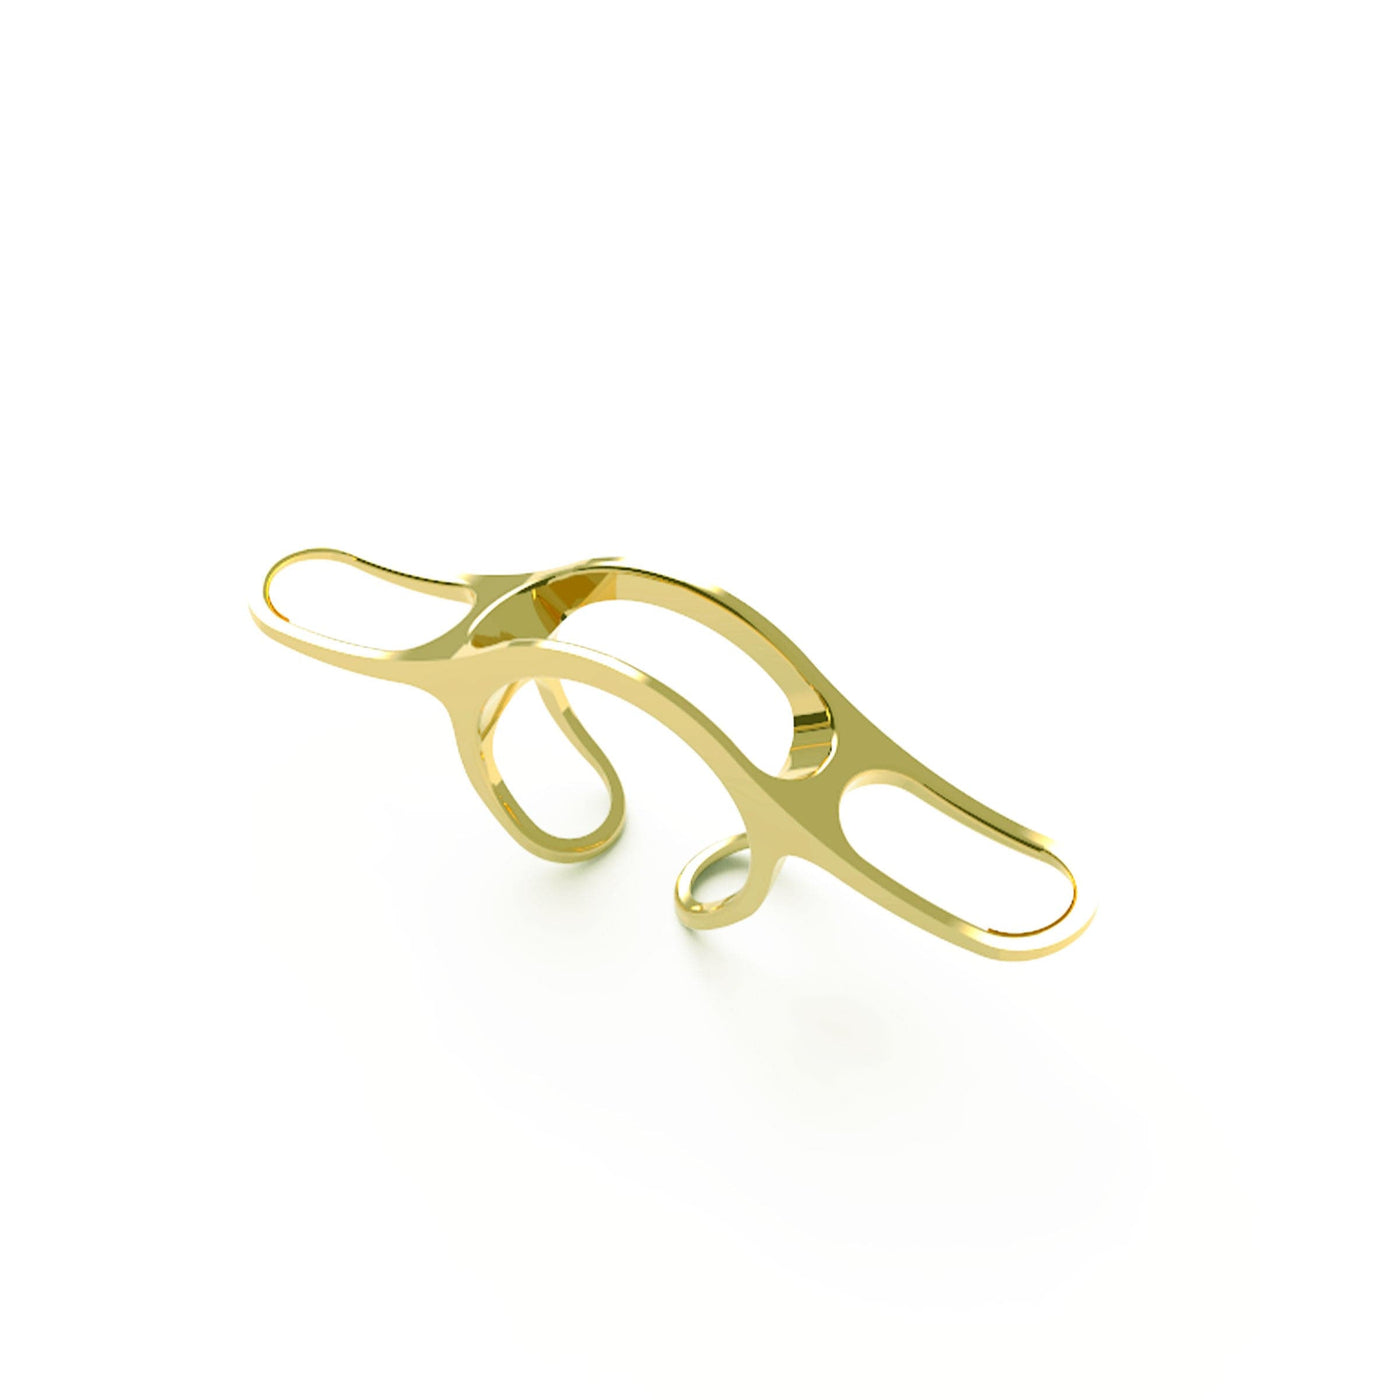 Gold-Plated Bookmark EX LIBRIS by Denis Santachiara for Cyrcus Design 01